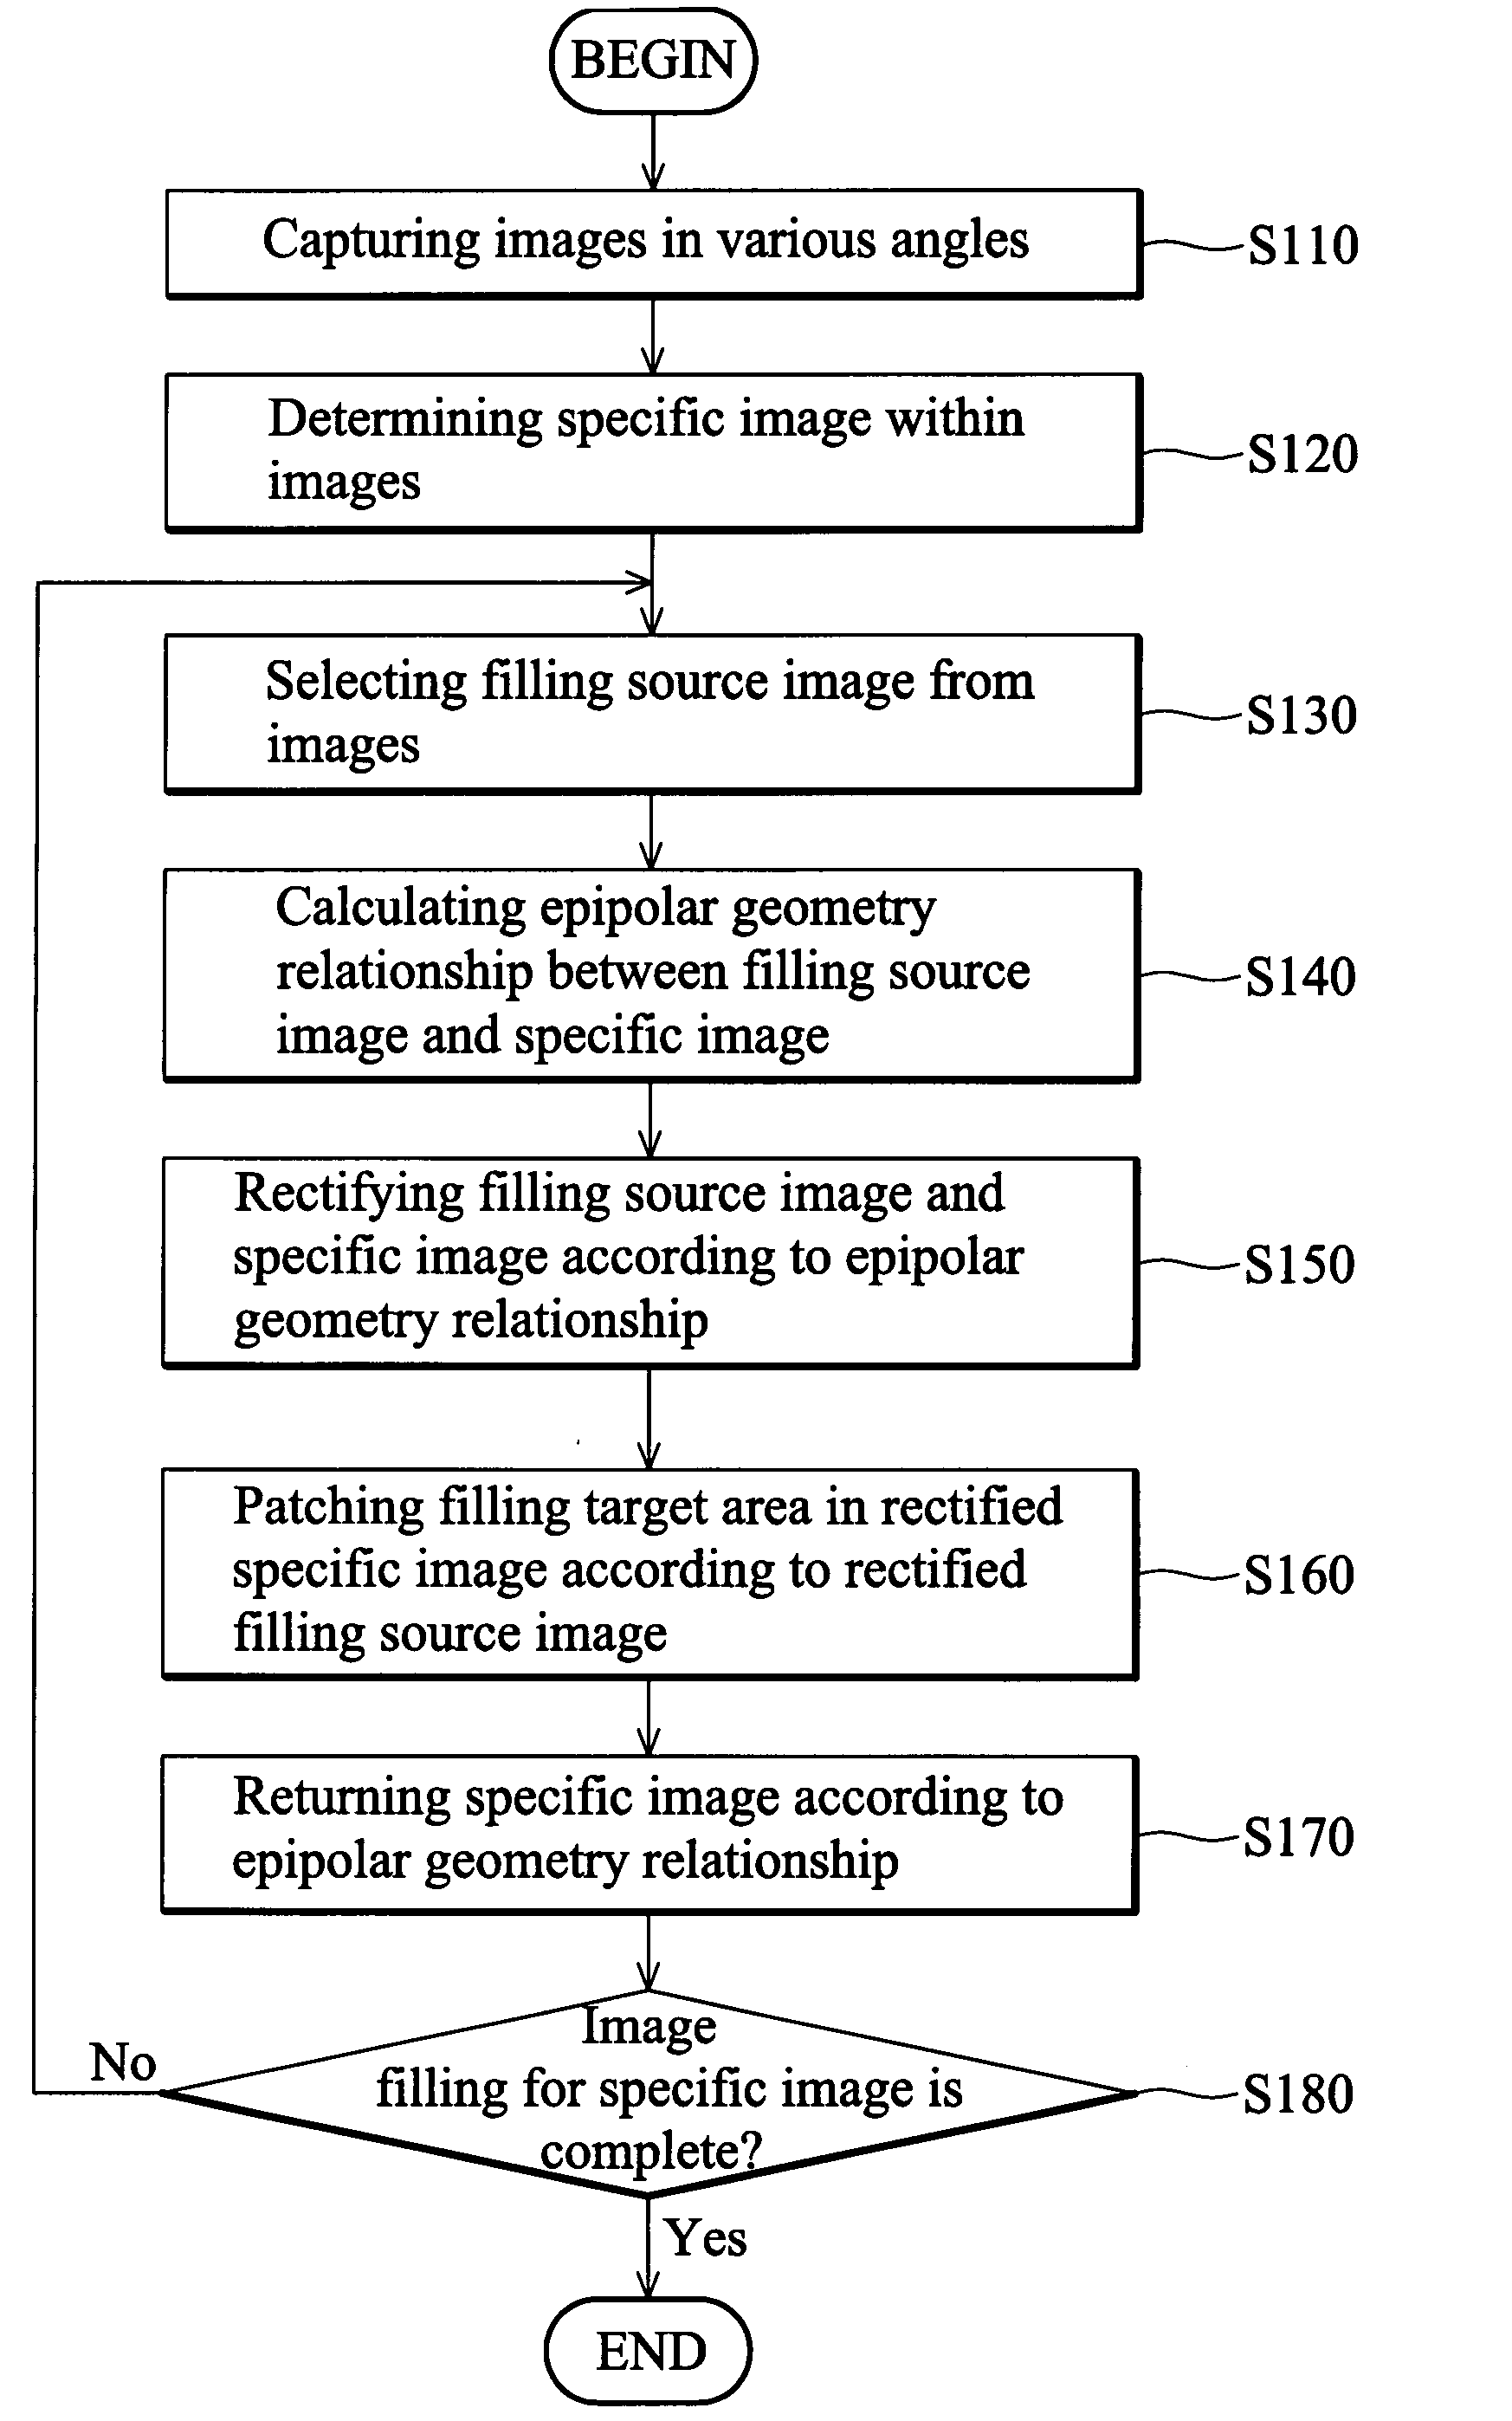 Image filling methods